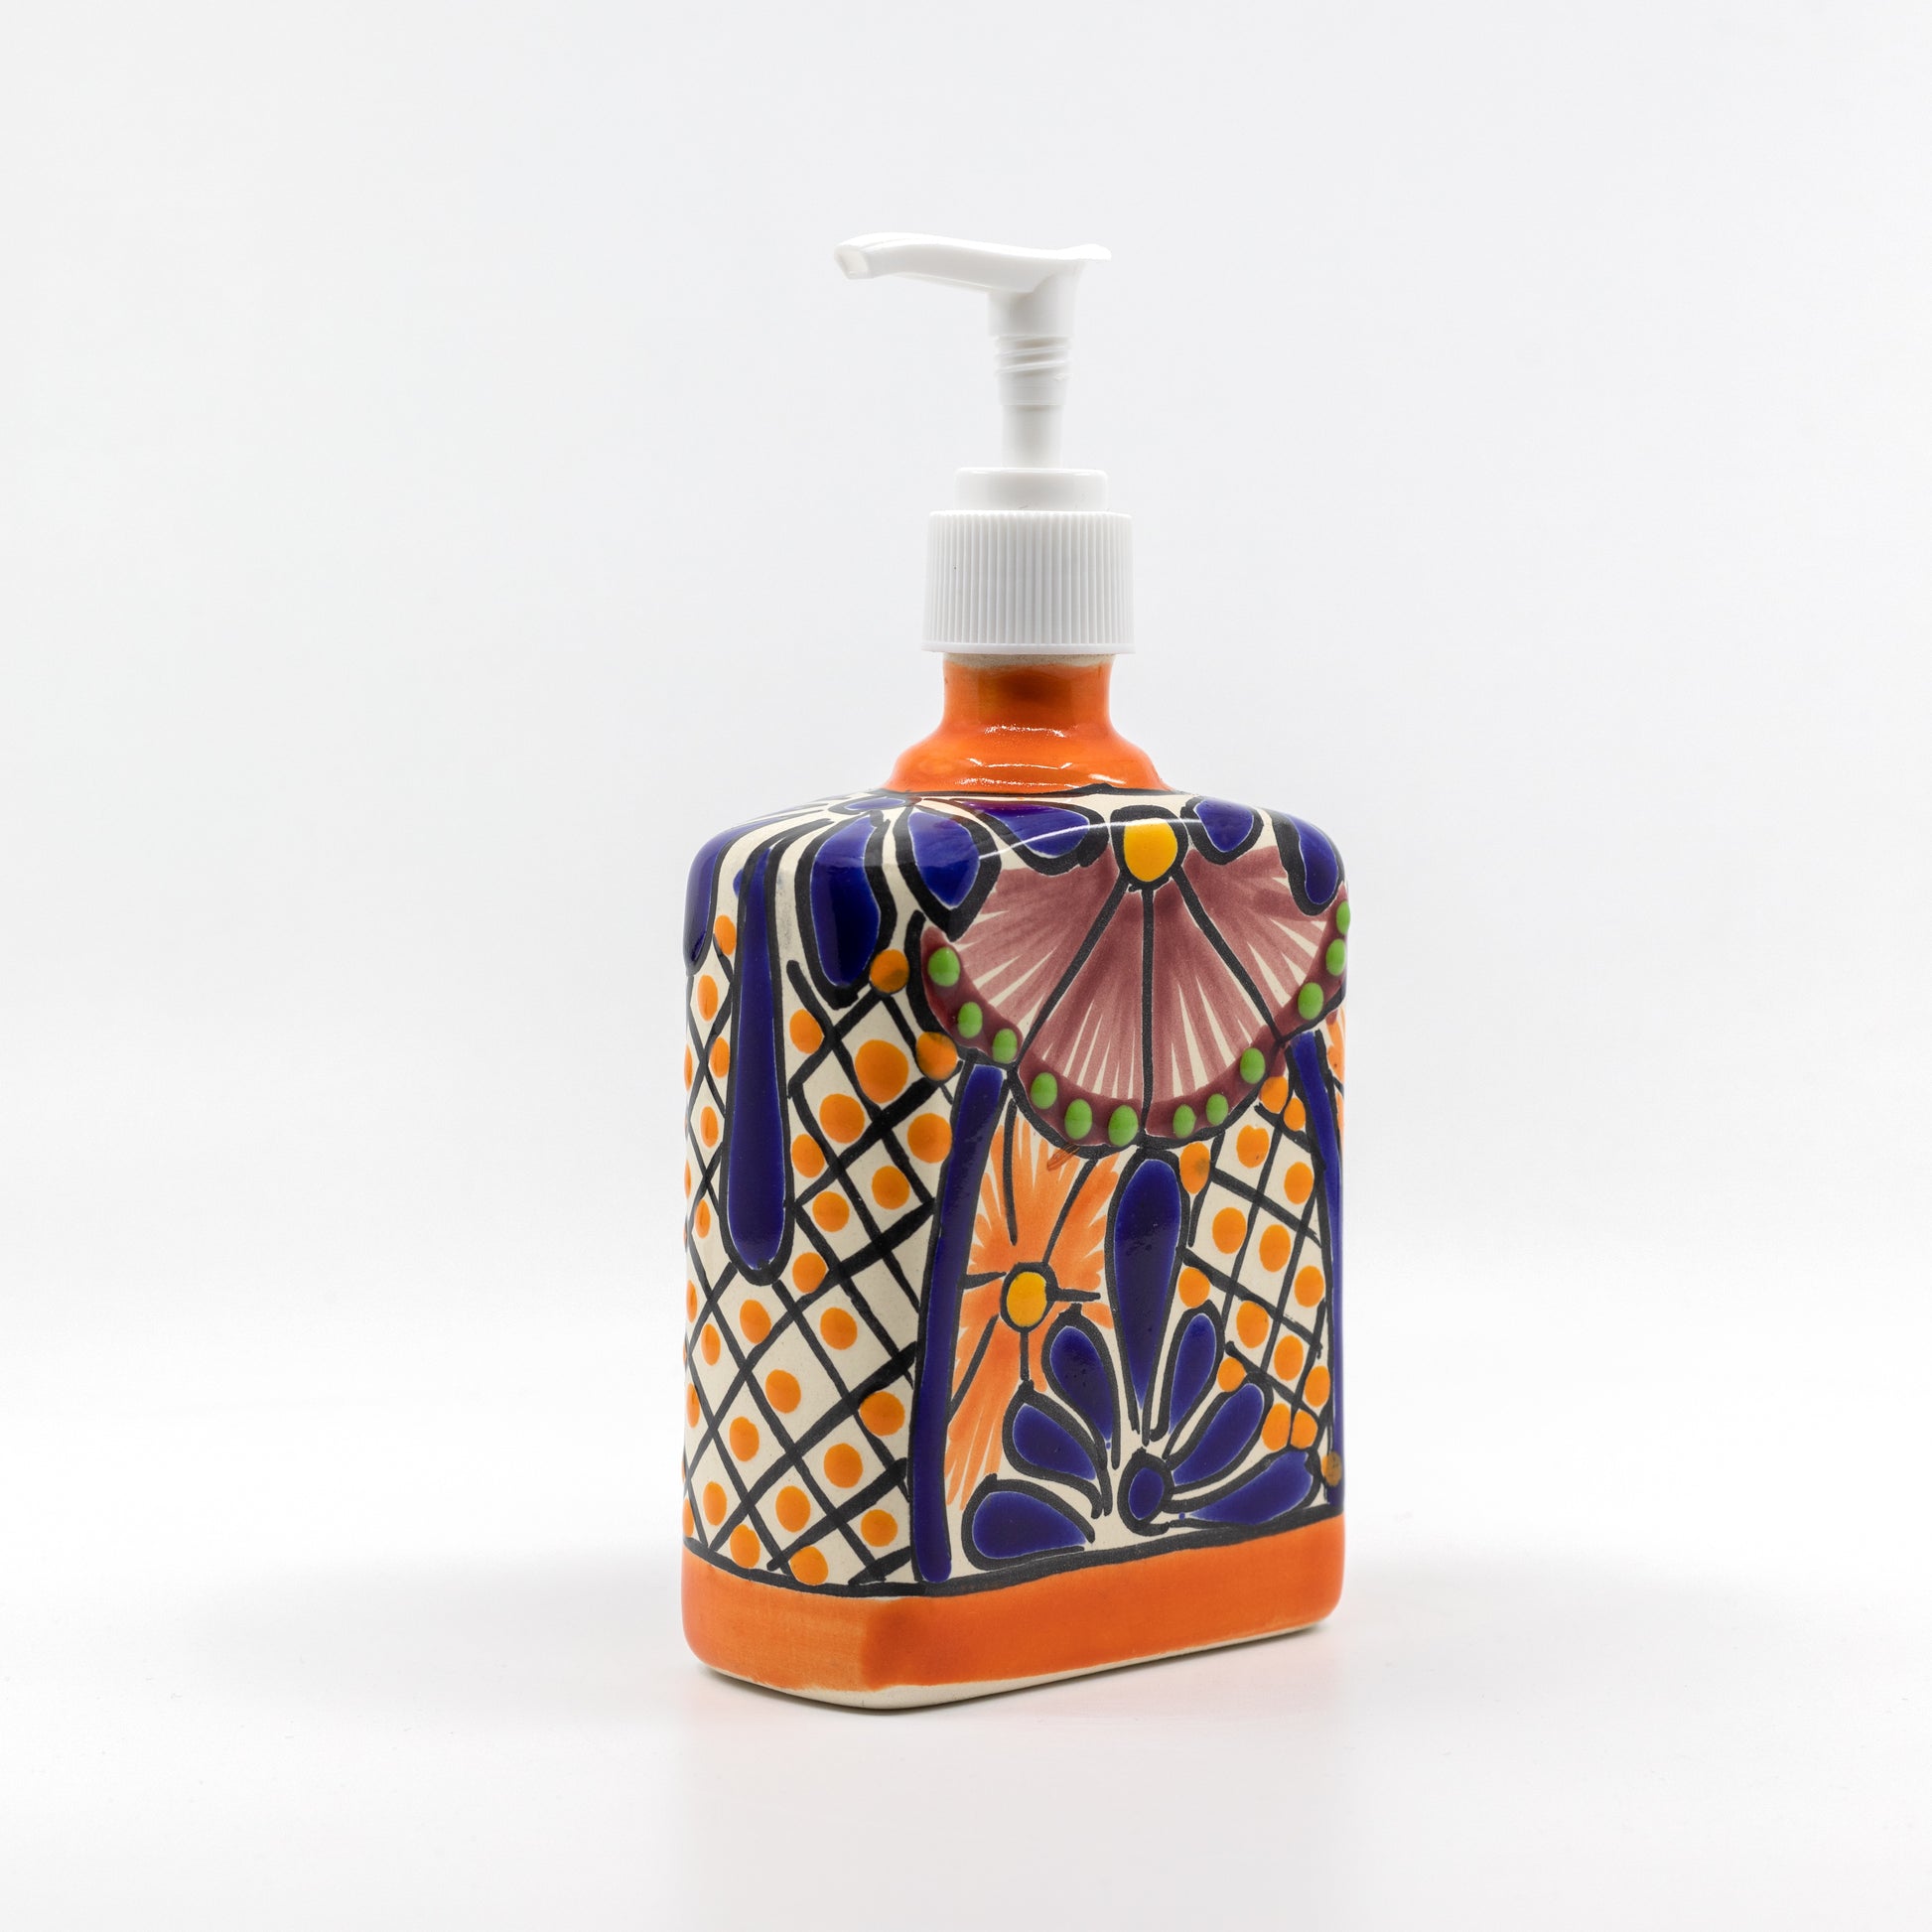 Casa Fiesta Designs Talavera Ceramic Soap & Lotion Dispenser, for Kitchen or Bathroom Countertops - Hand Painted Mexican